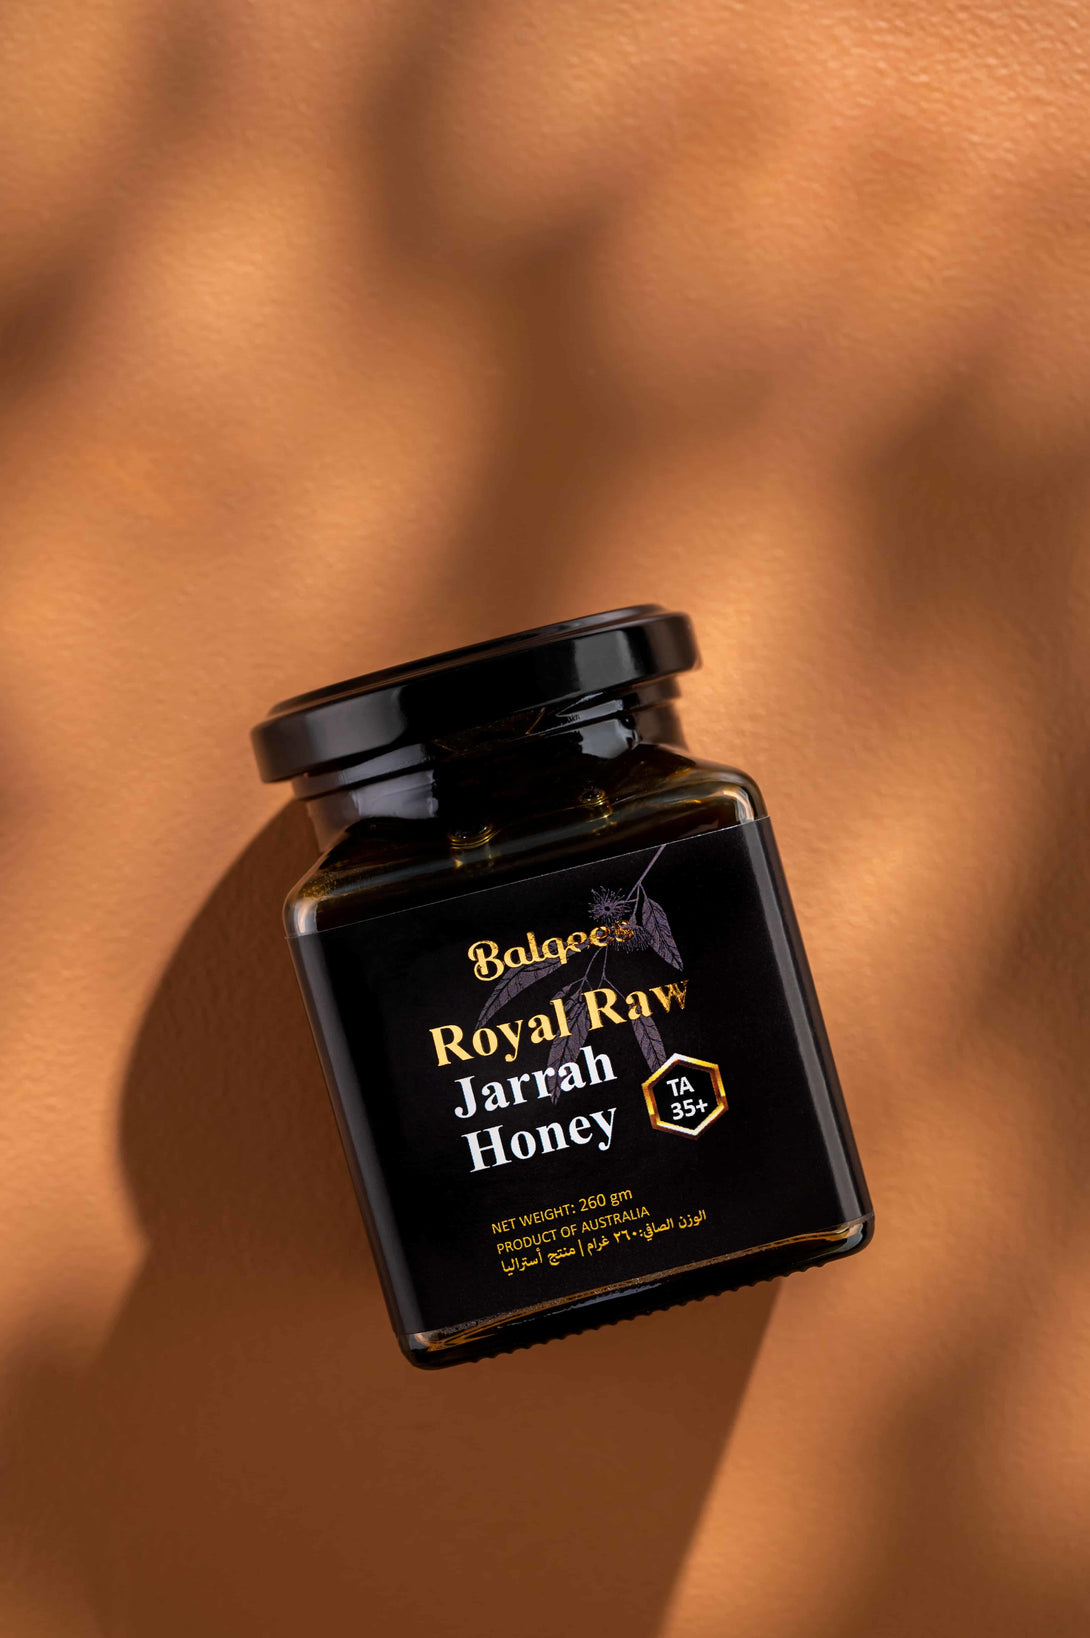 Jar of Royal Raw Jarrah Honey lying on orange stone in the sun